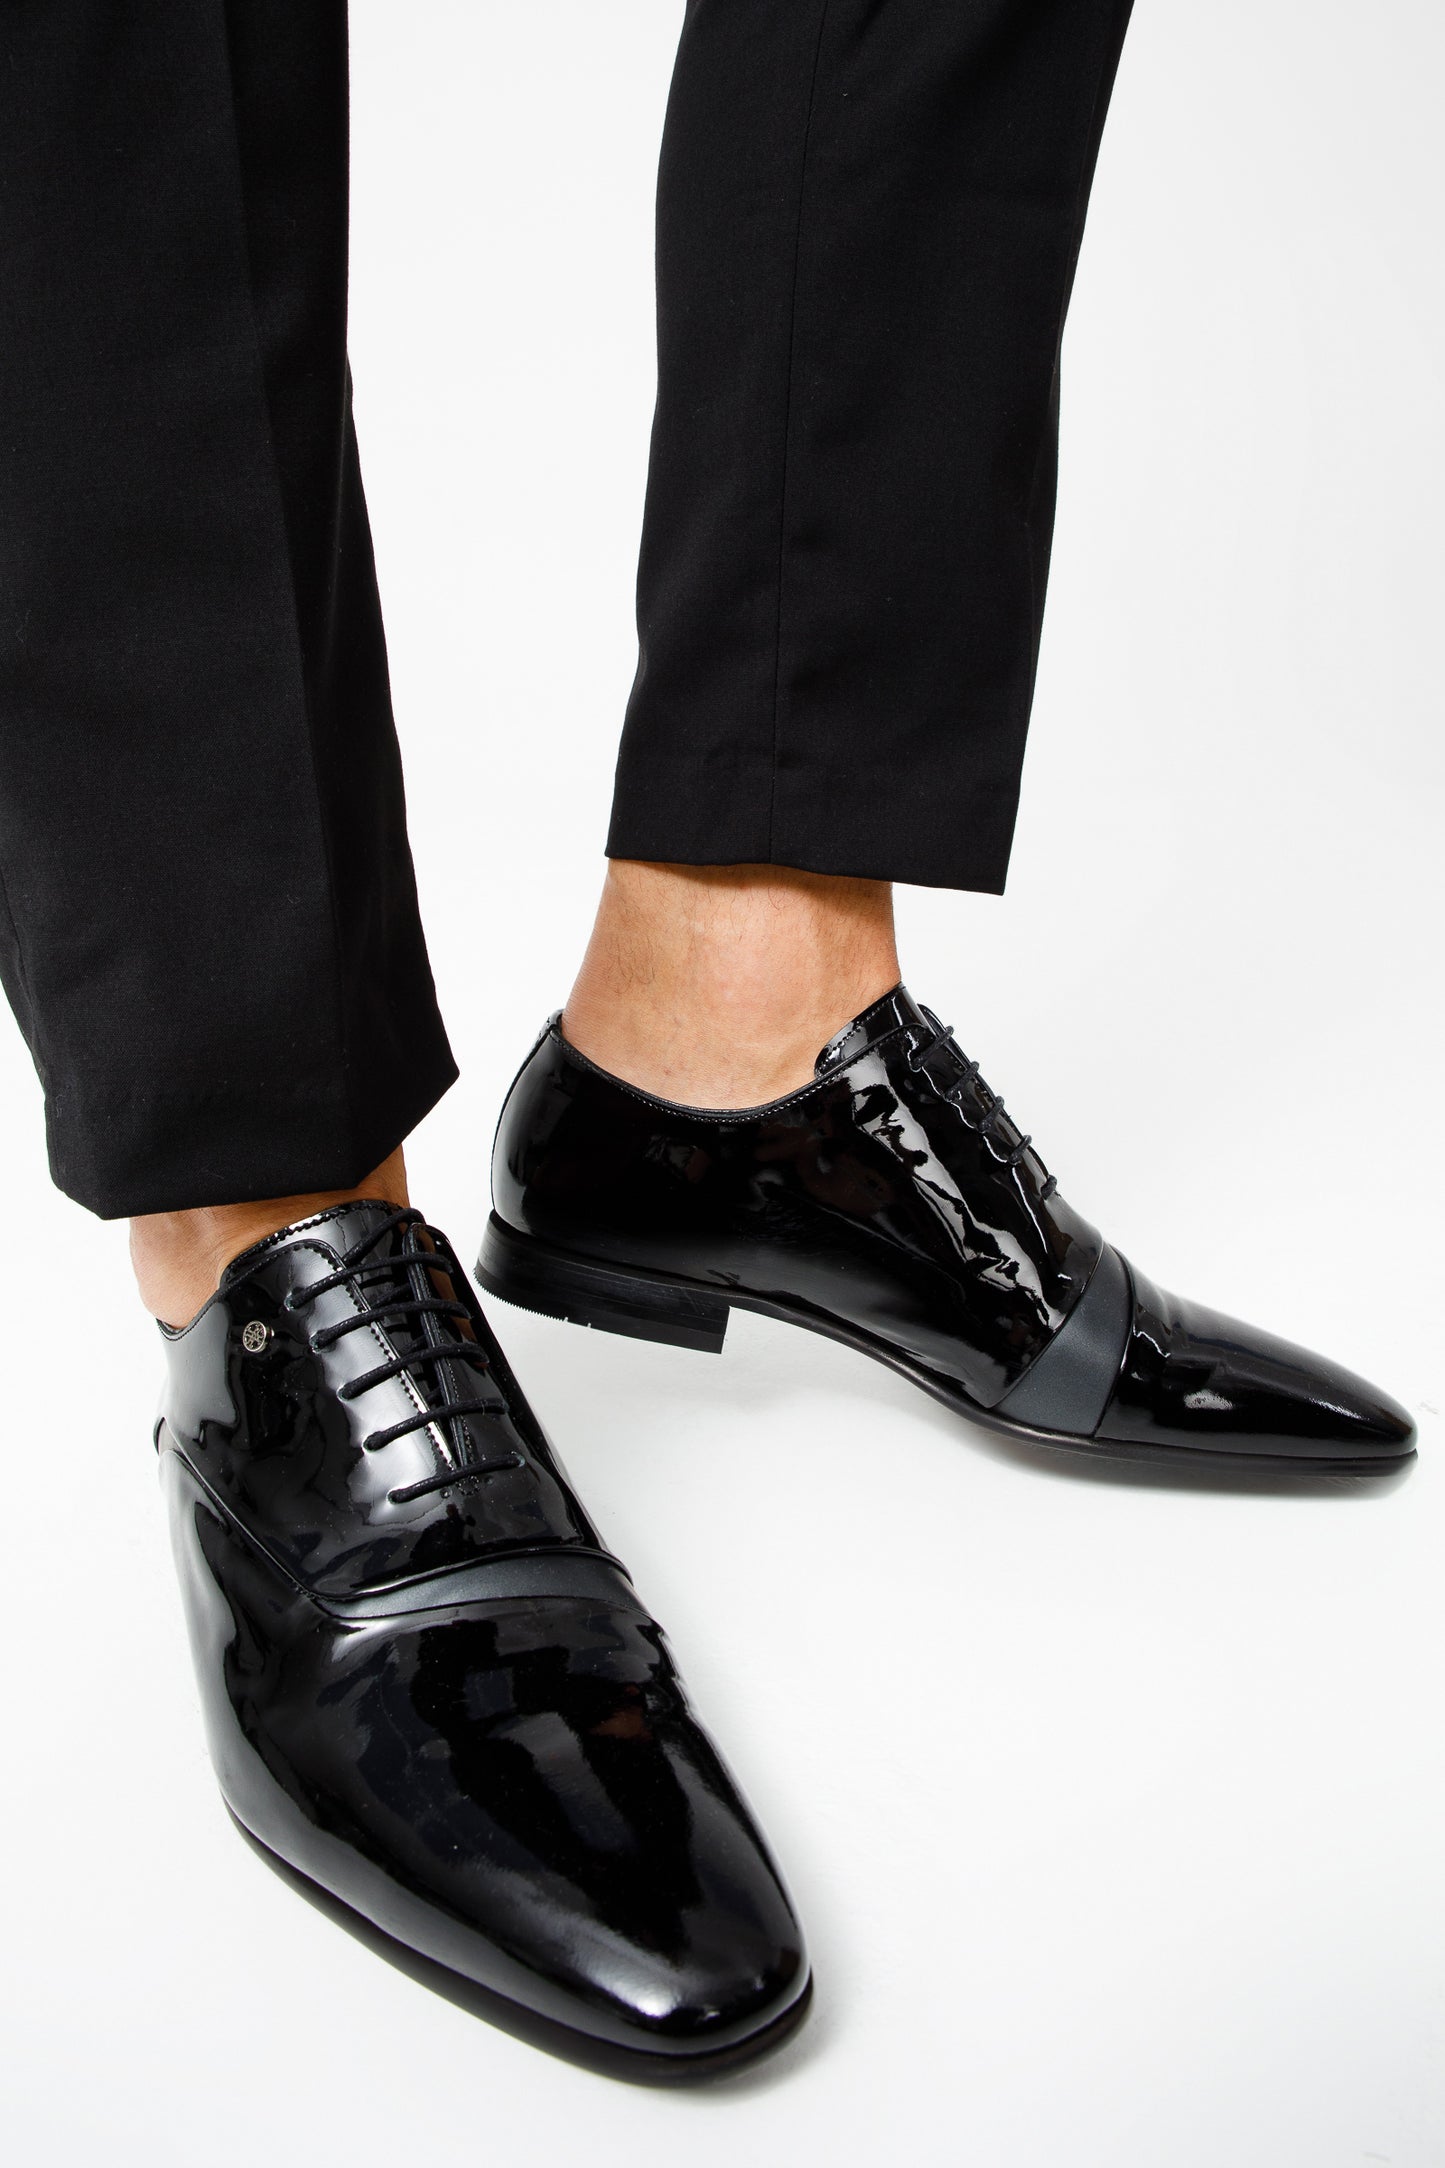 The Paris Black Patent Plain Toe Oxford Men Shoe